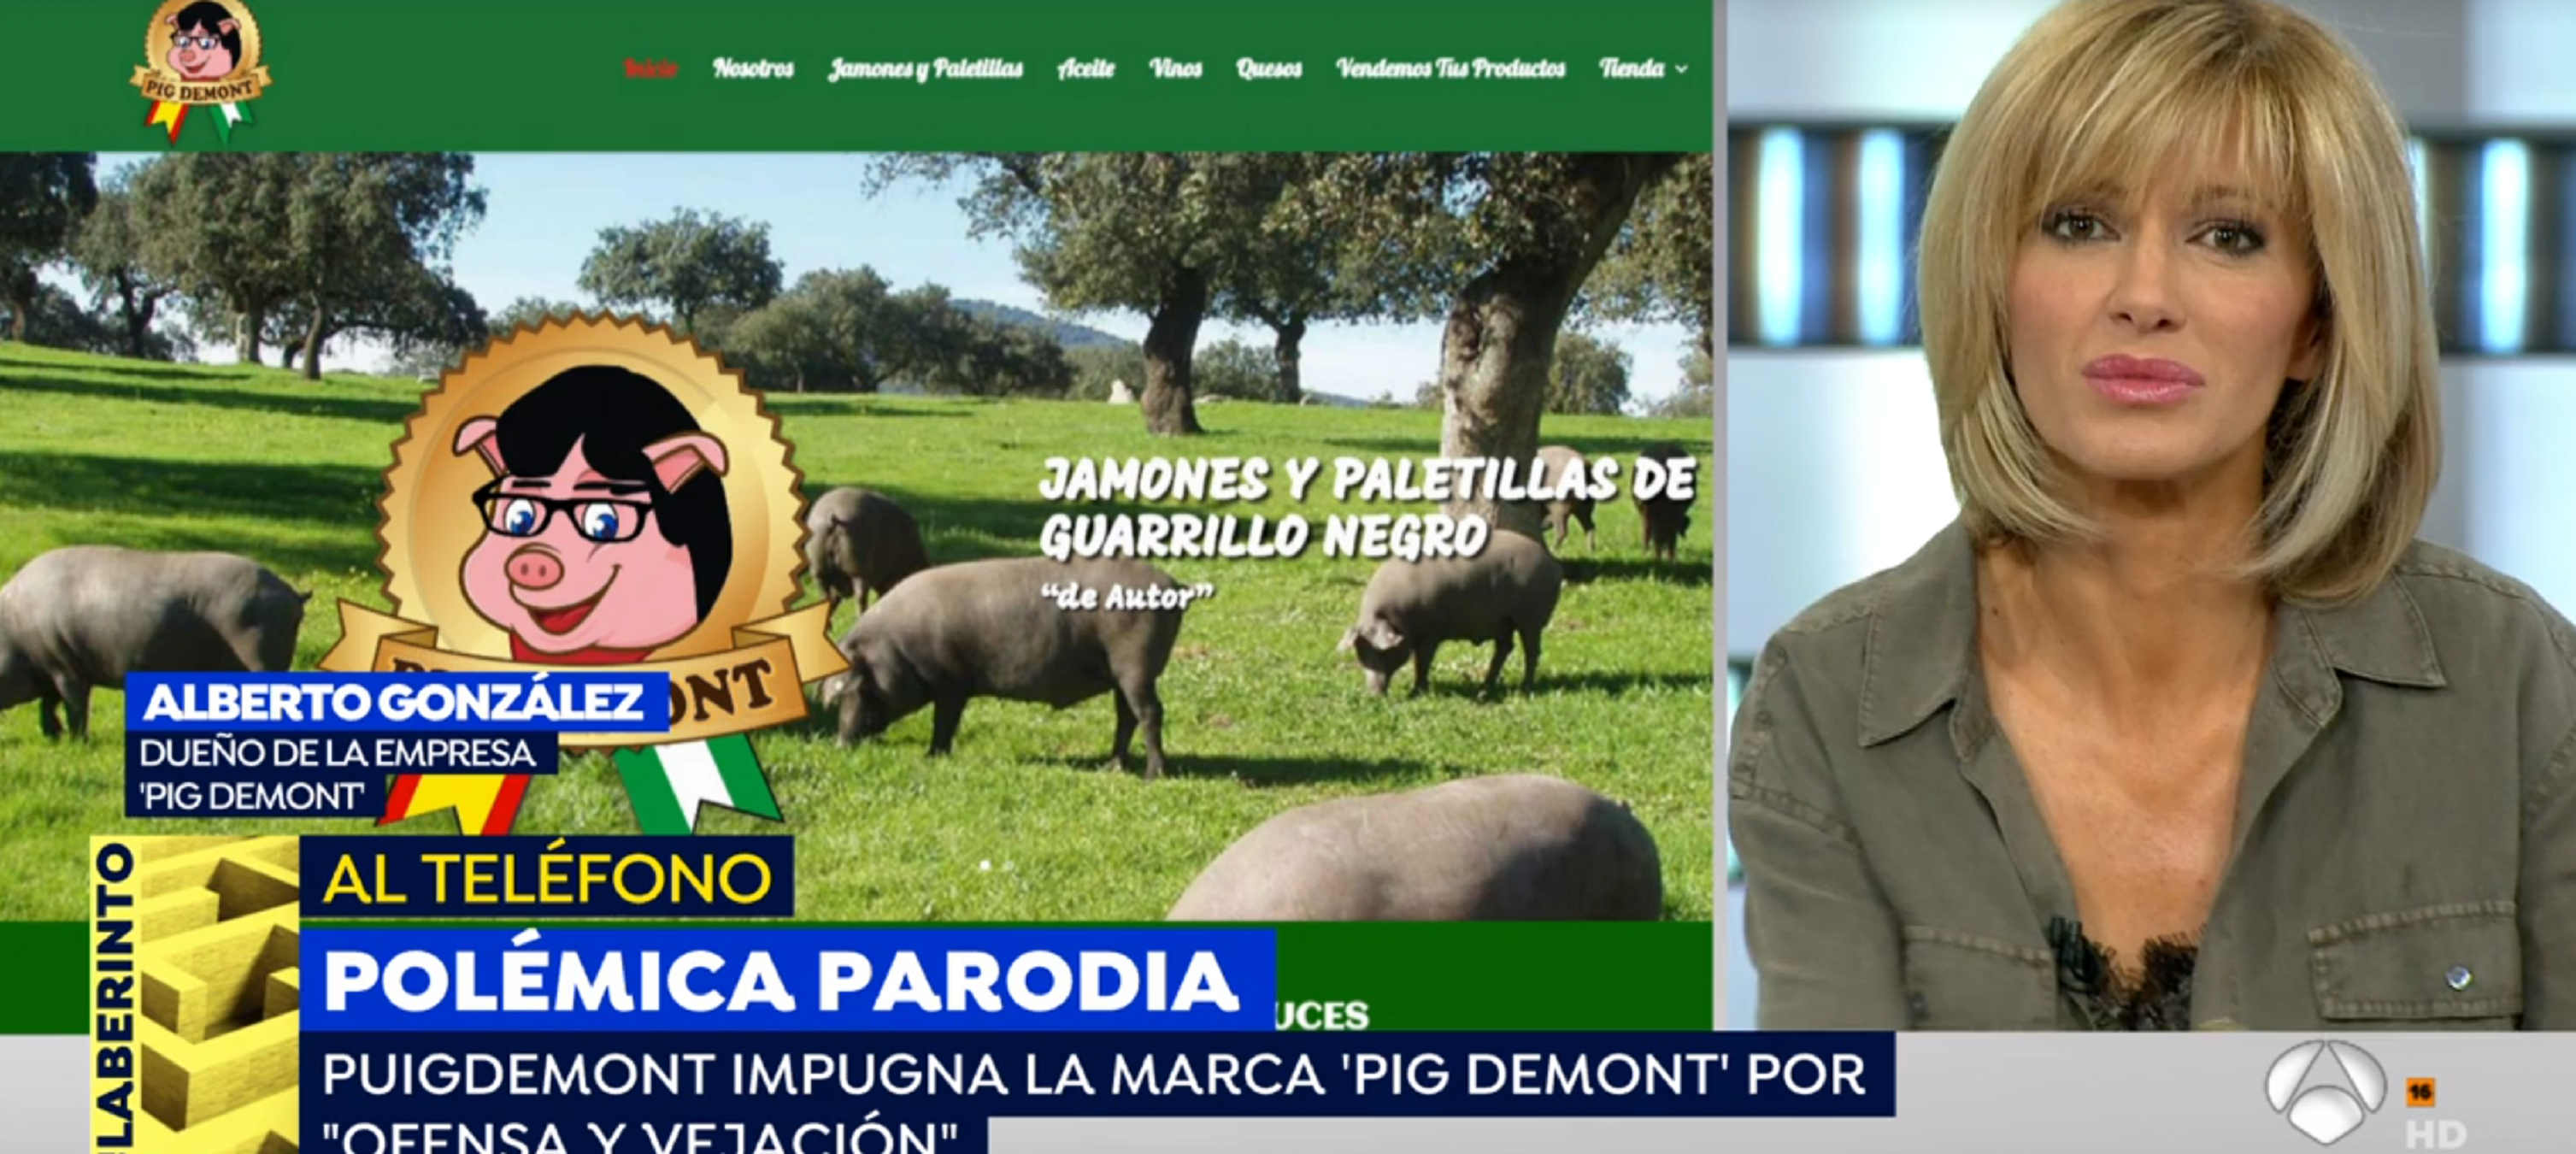 L'empresari Pig Demont denunciarà Puigdemont "por hacerme perder dinero"